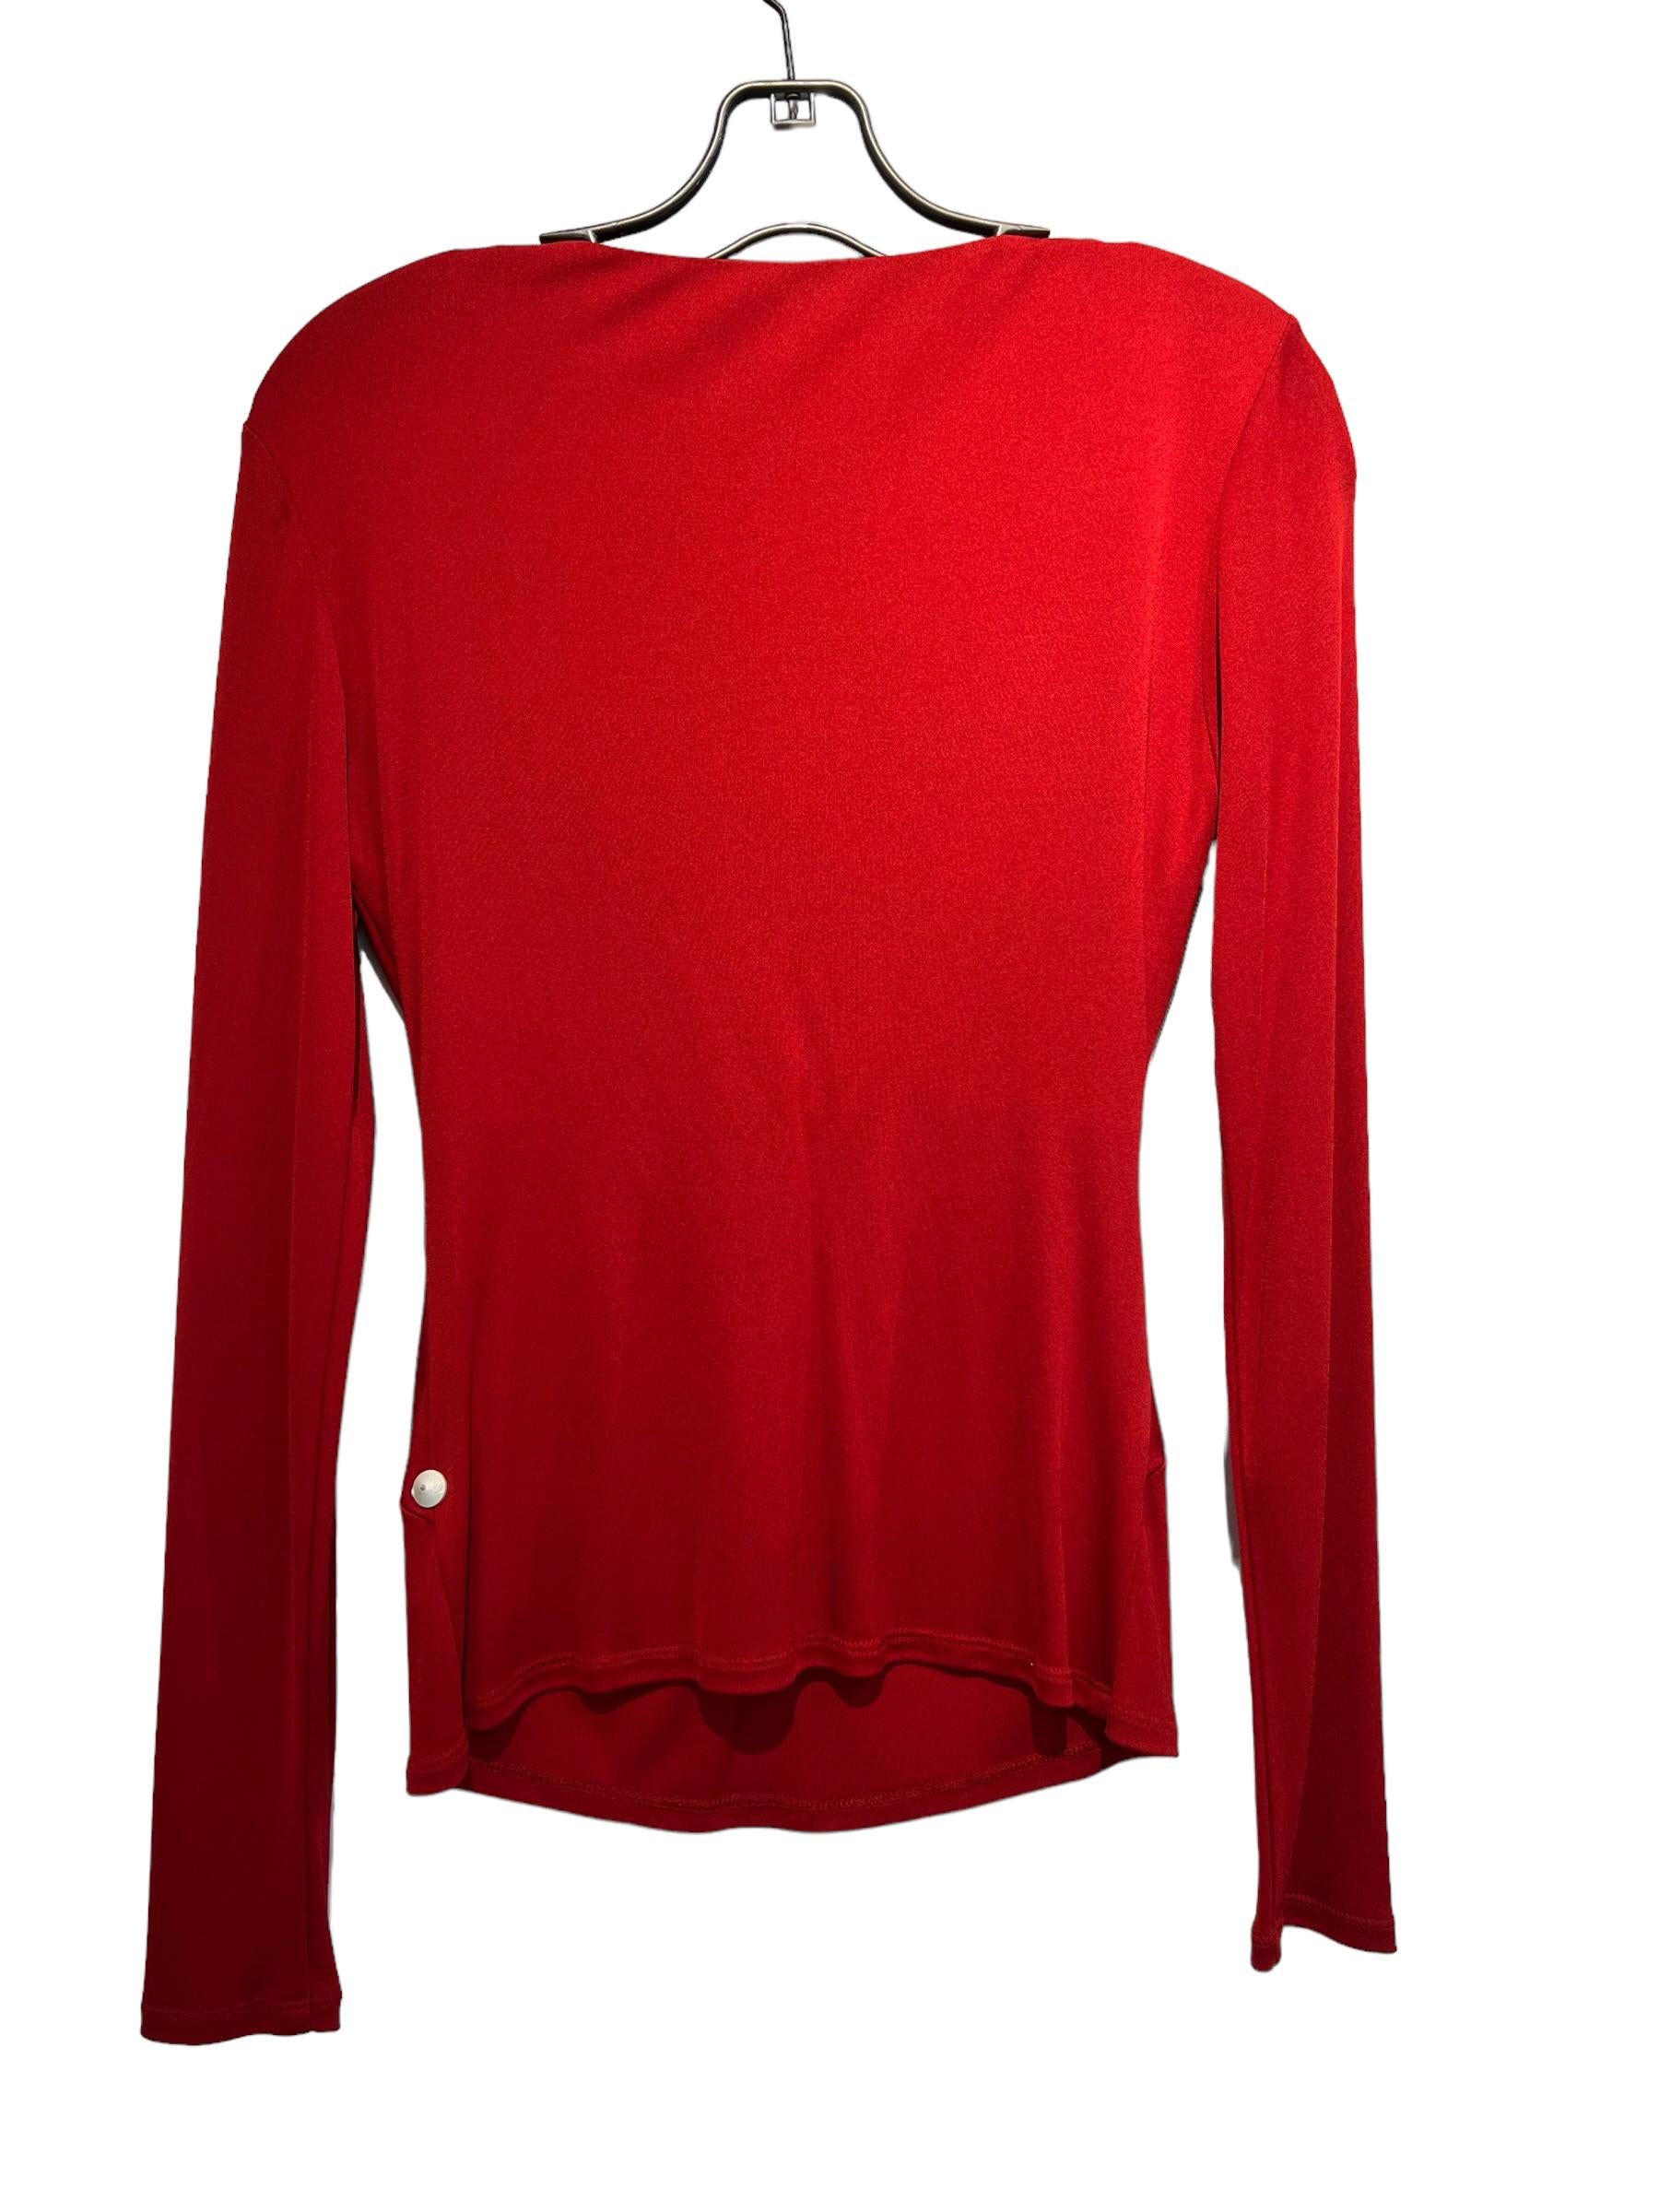 Women's Roberto Cavalli Red Long Sleeve Blouse